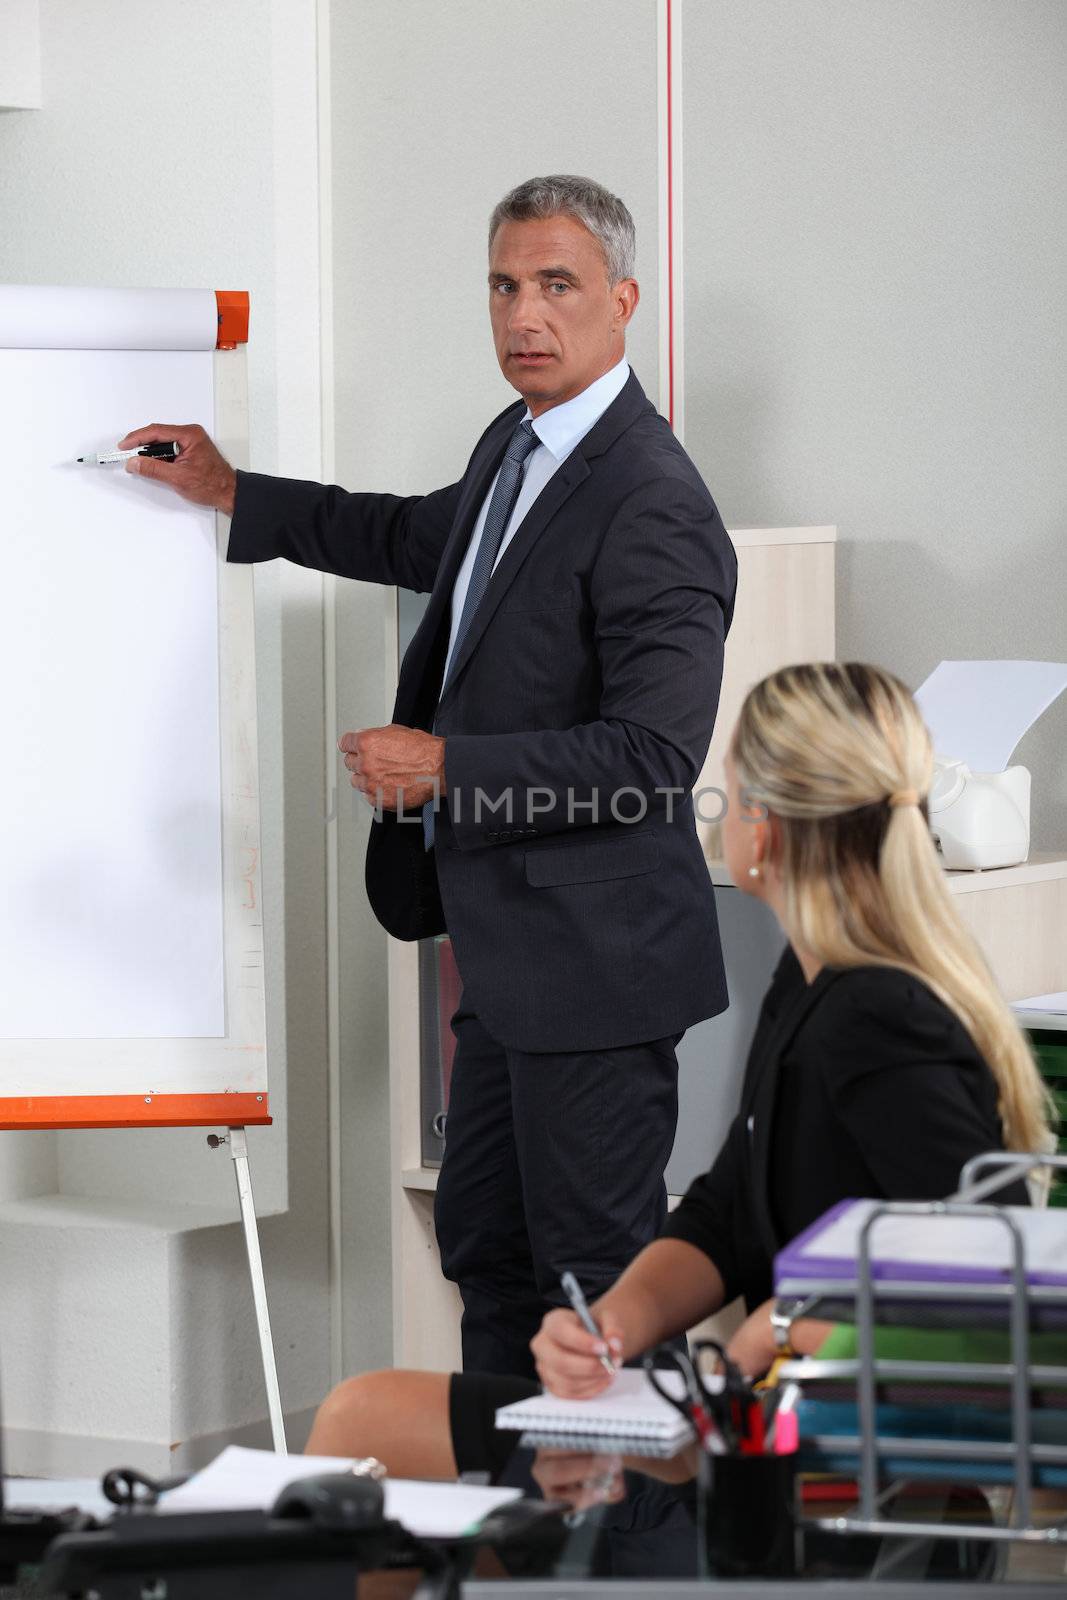 Businessman giving a presentation